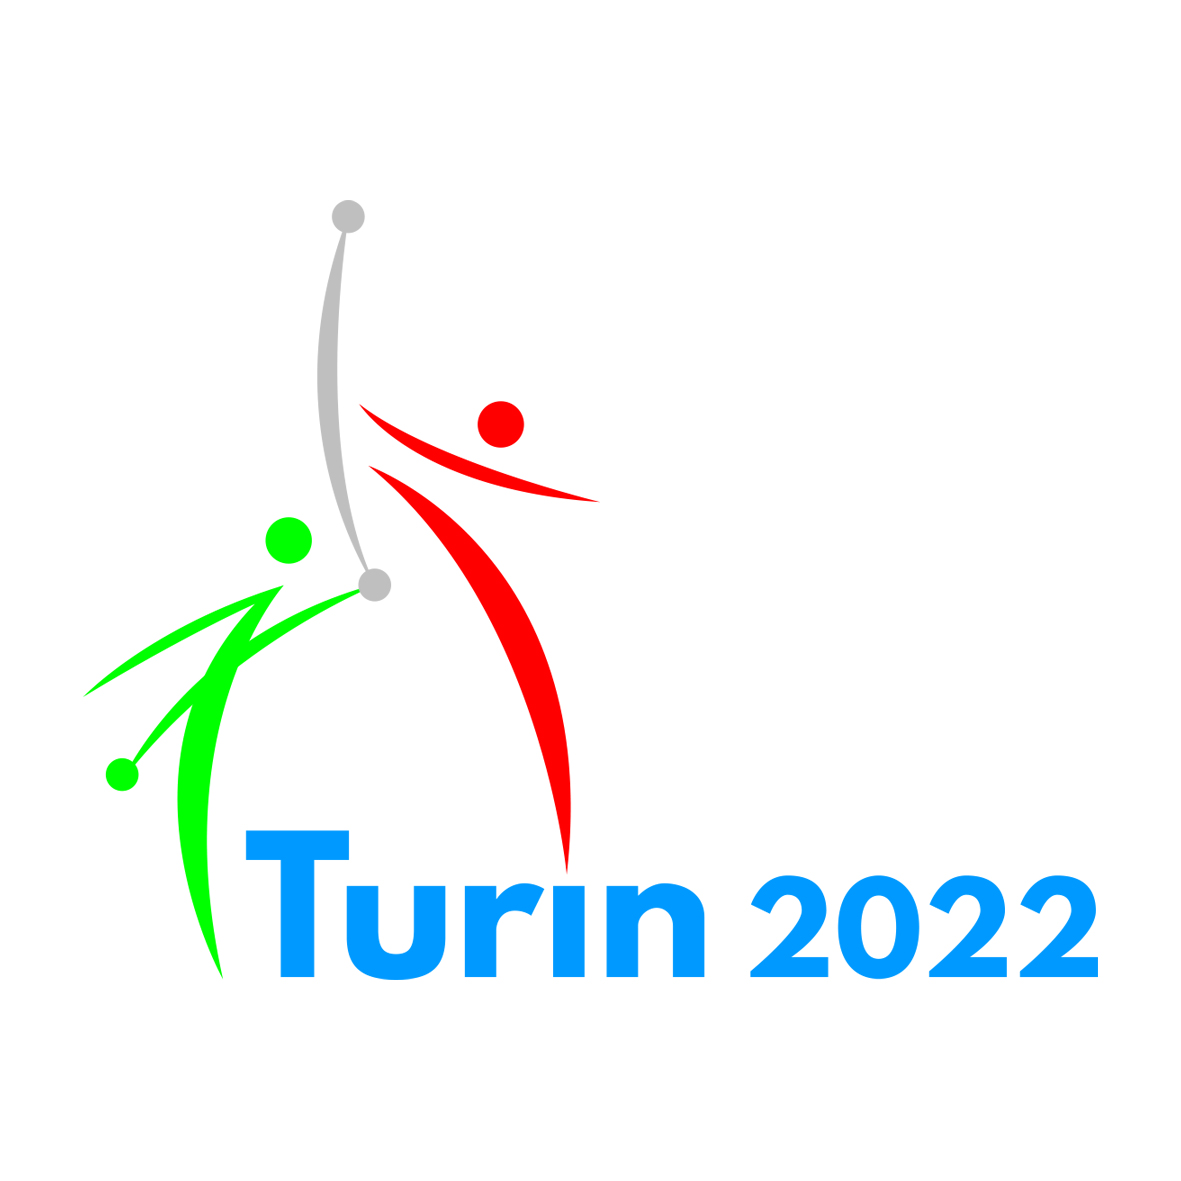 Turin2022 logo CMYK